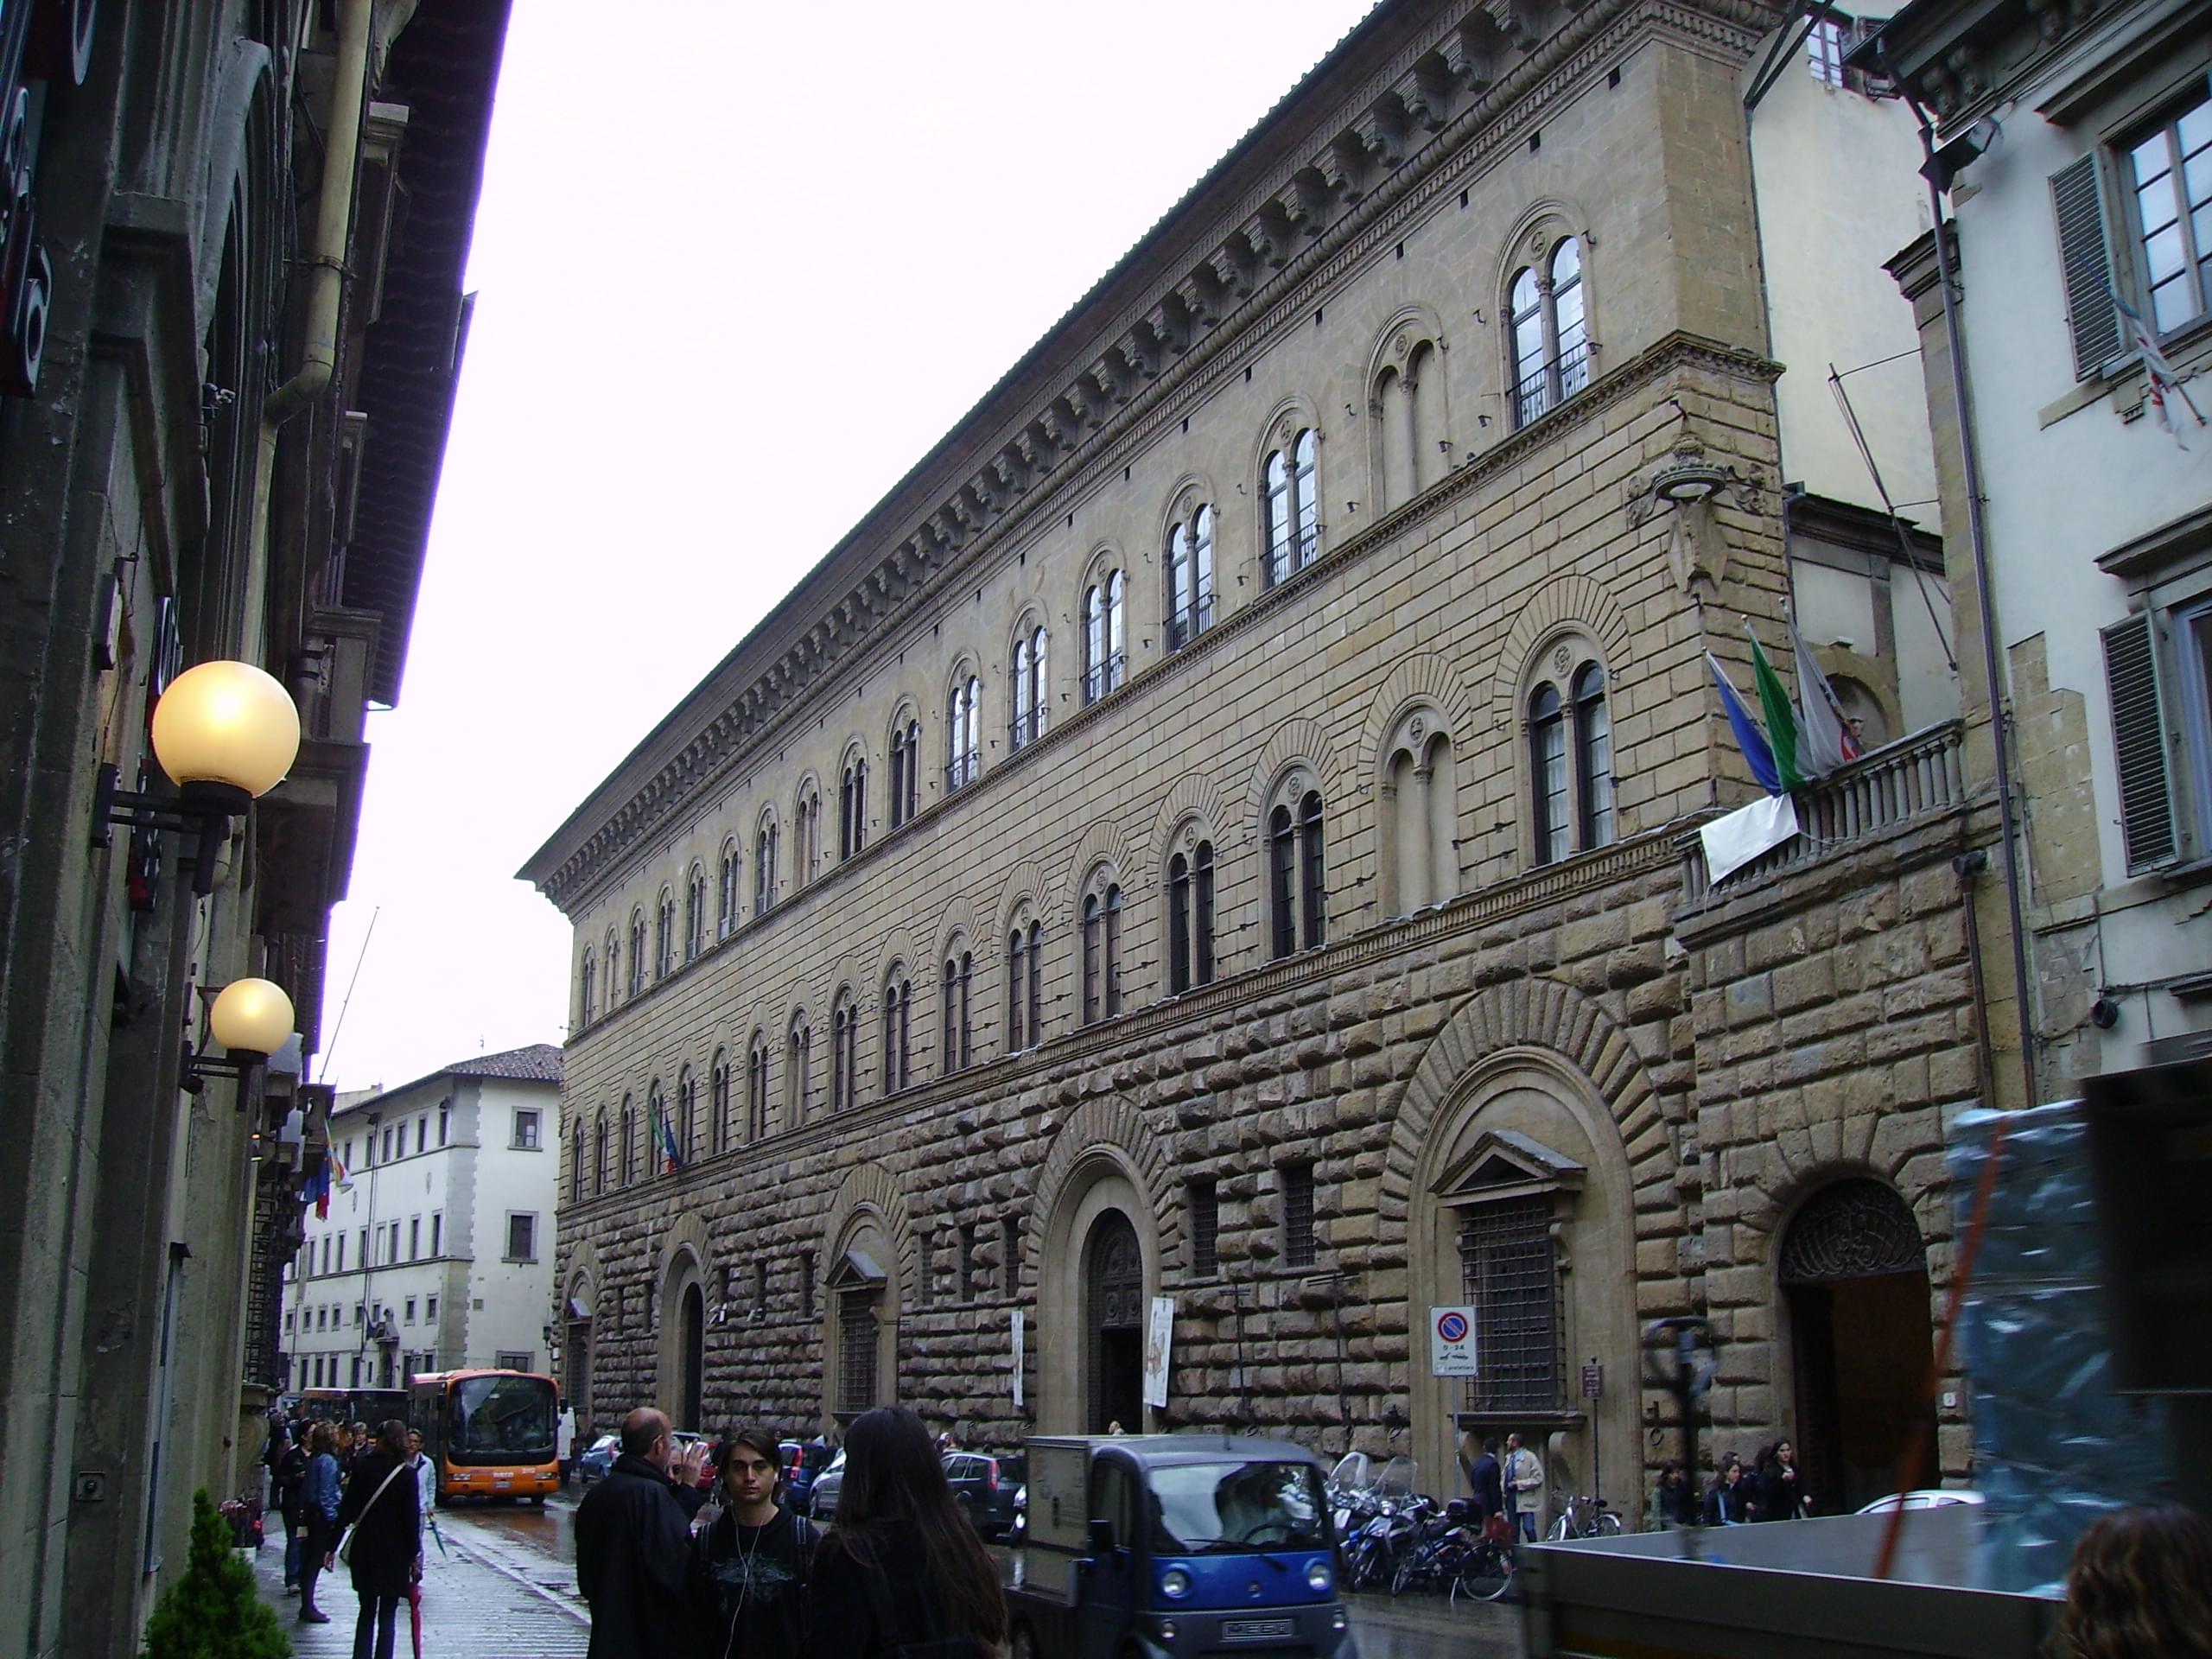 Riccardi Medici Palace Overview